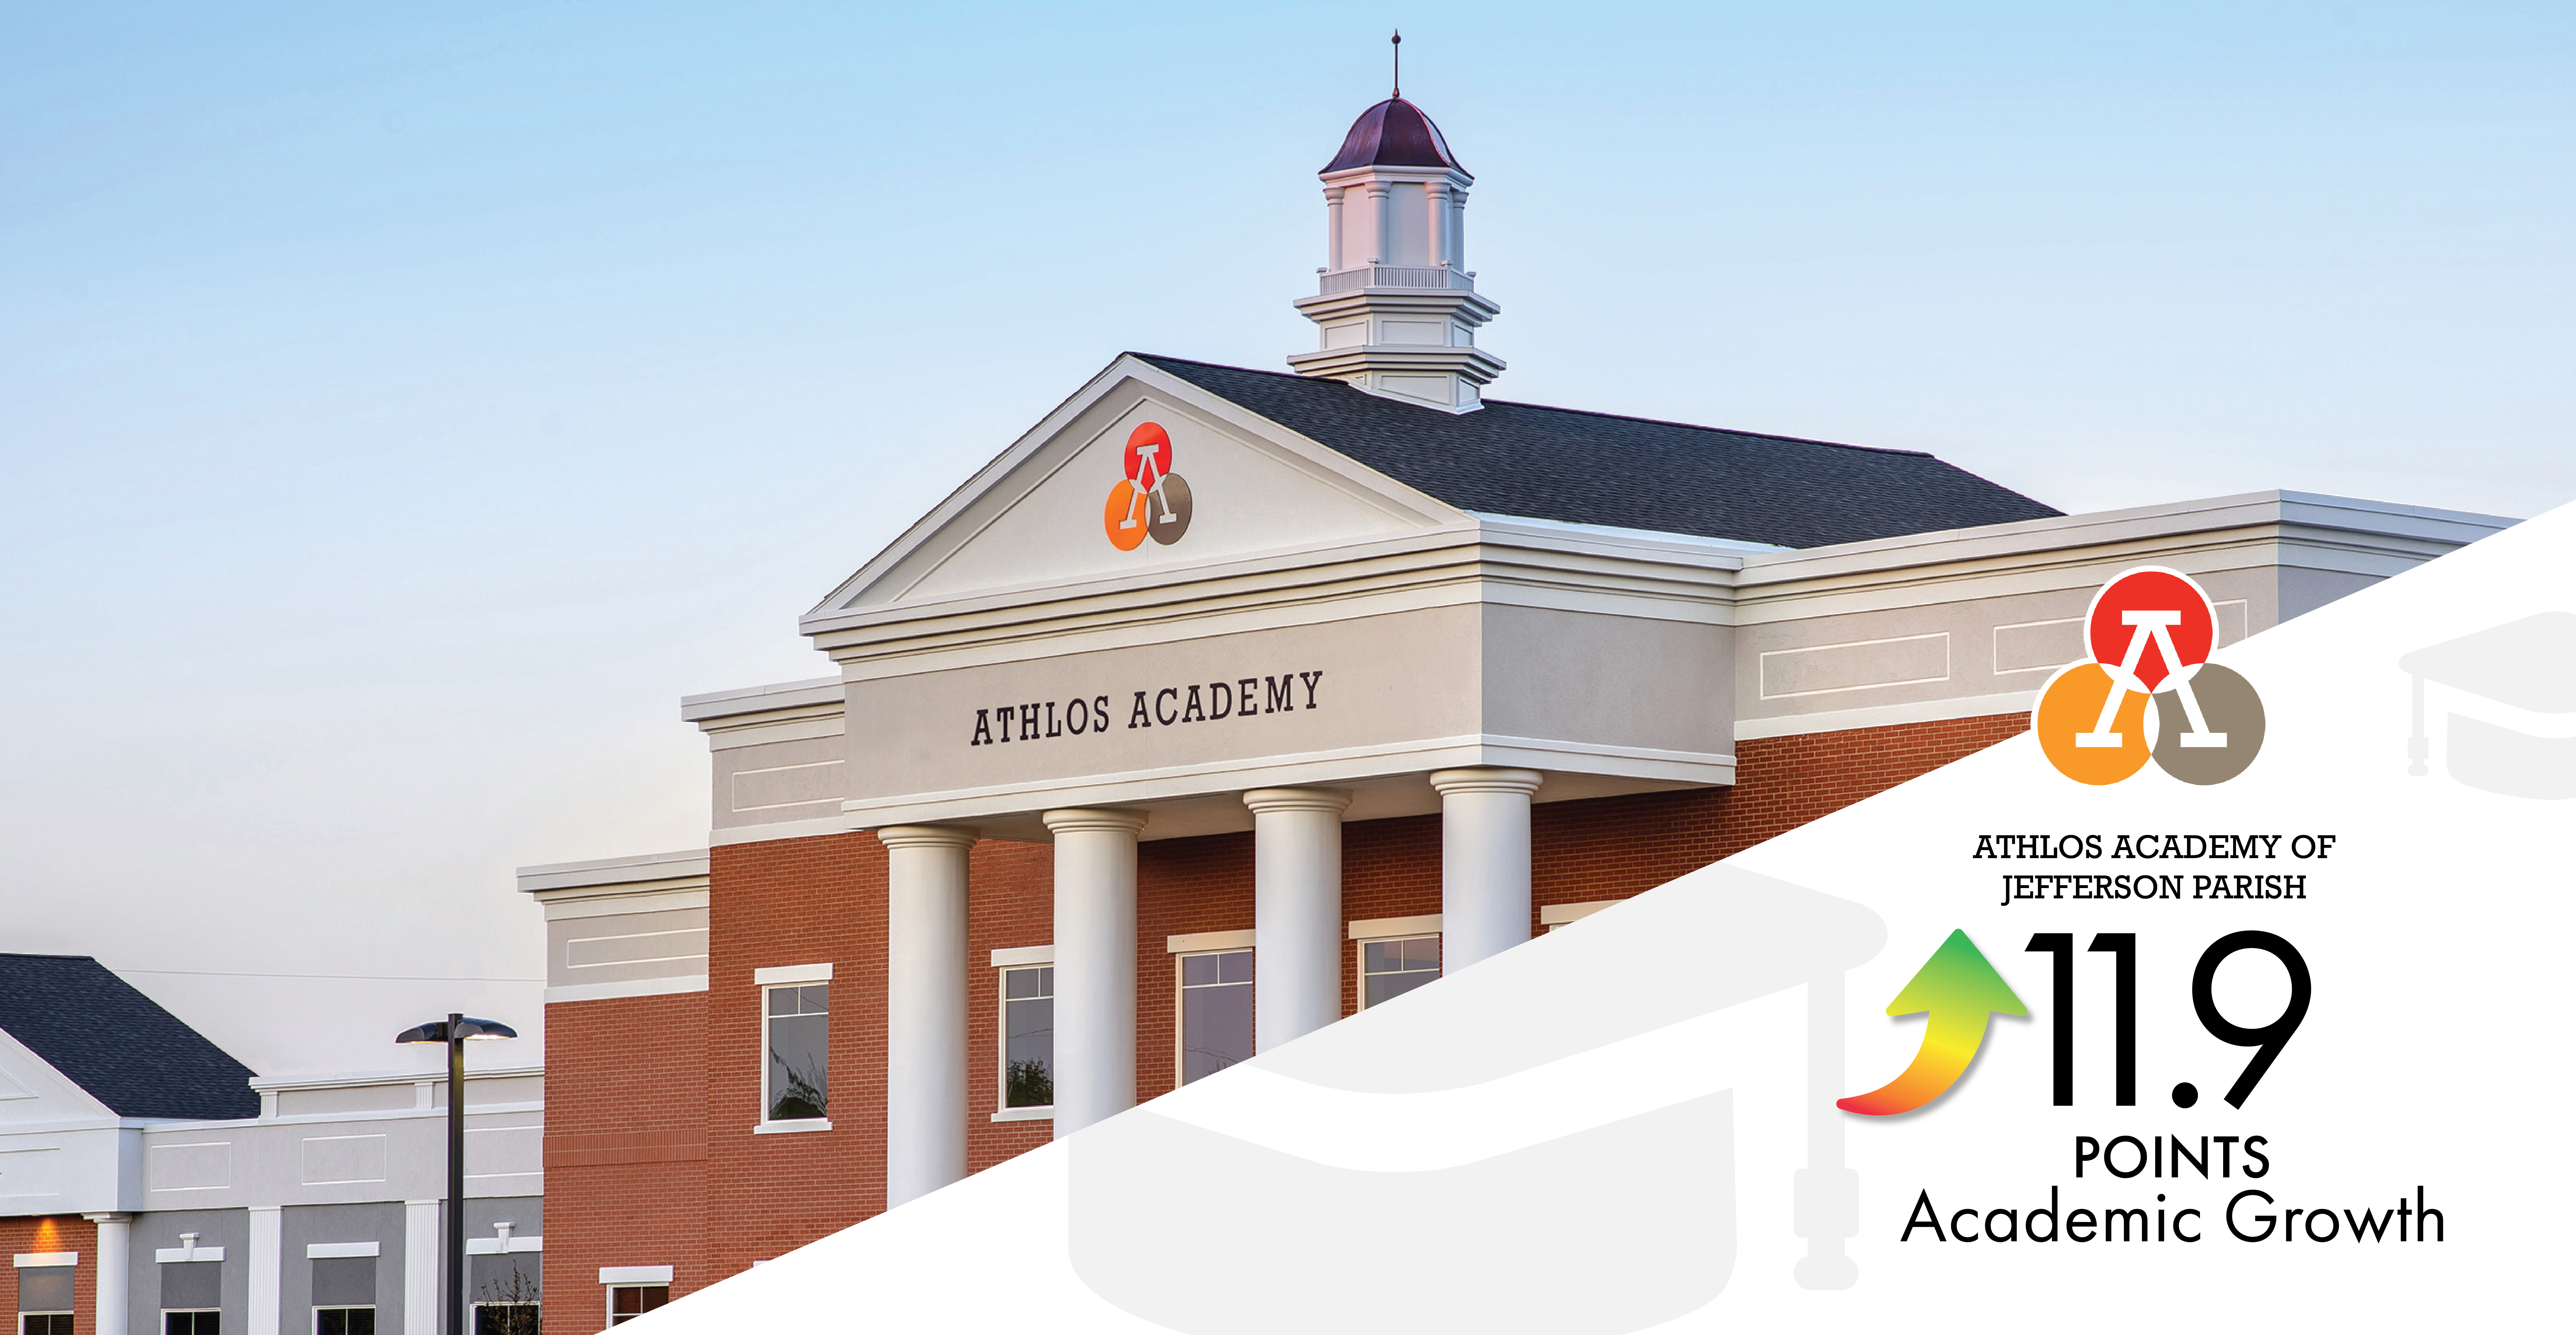 Athlos Academy on track to reach academic goals